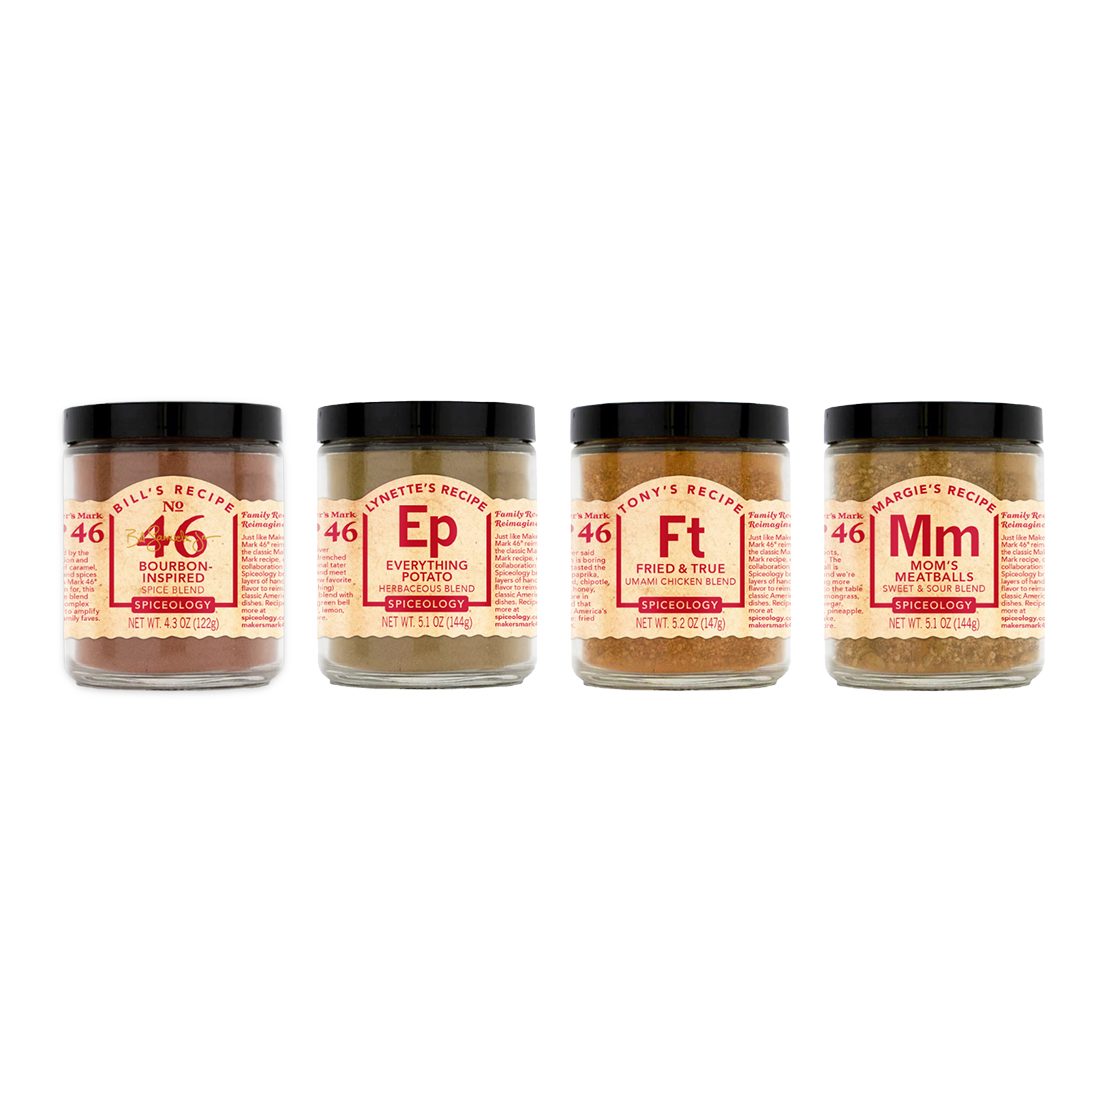 Makers Mark Seasonings Spice Flight Ecomm Via Spiceology.com